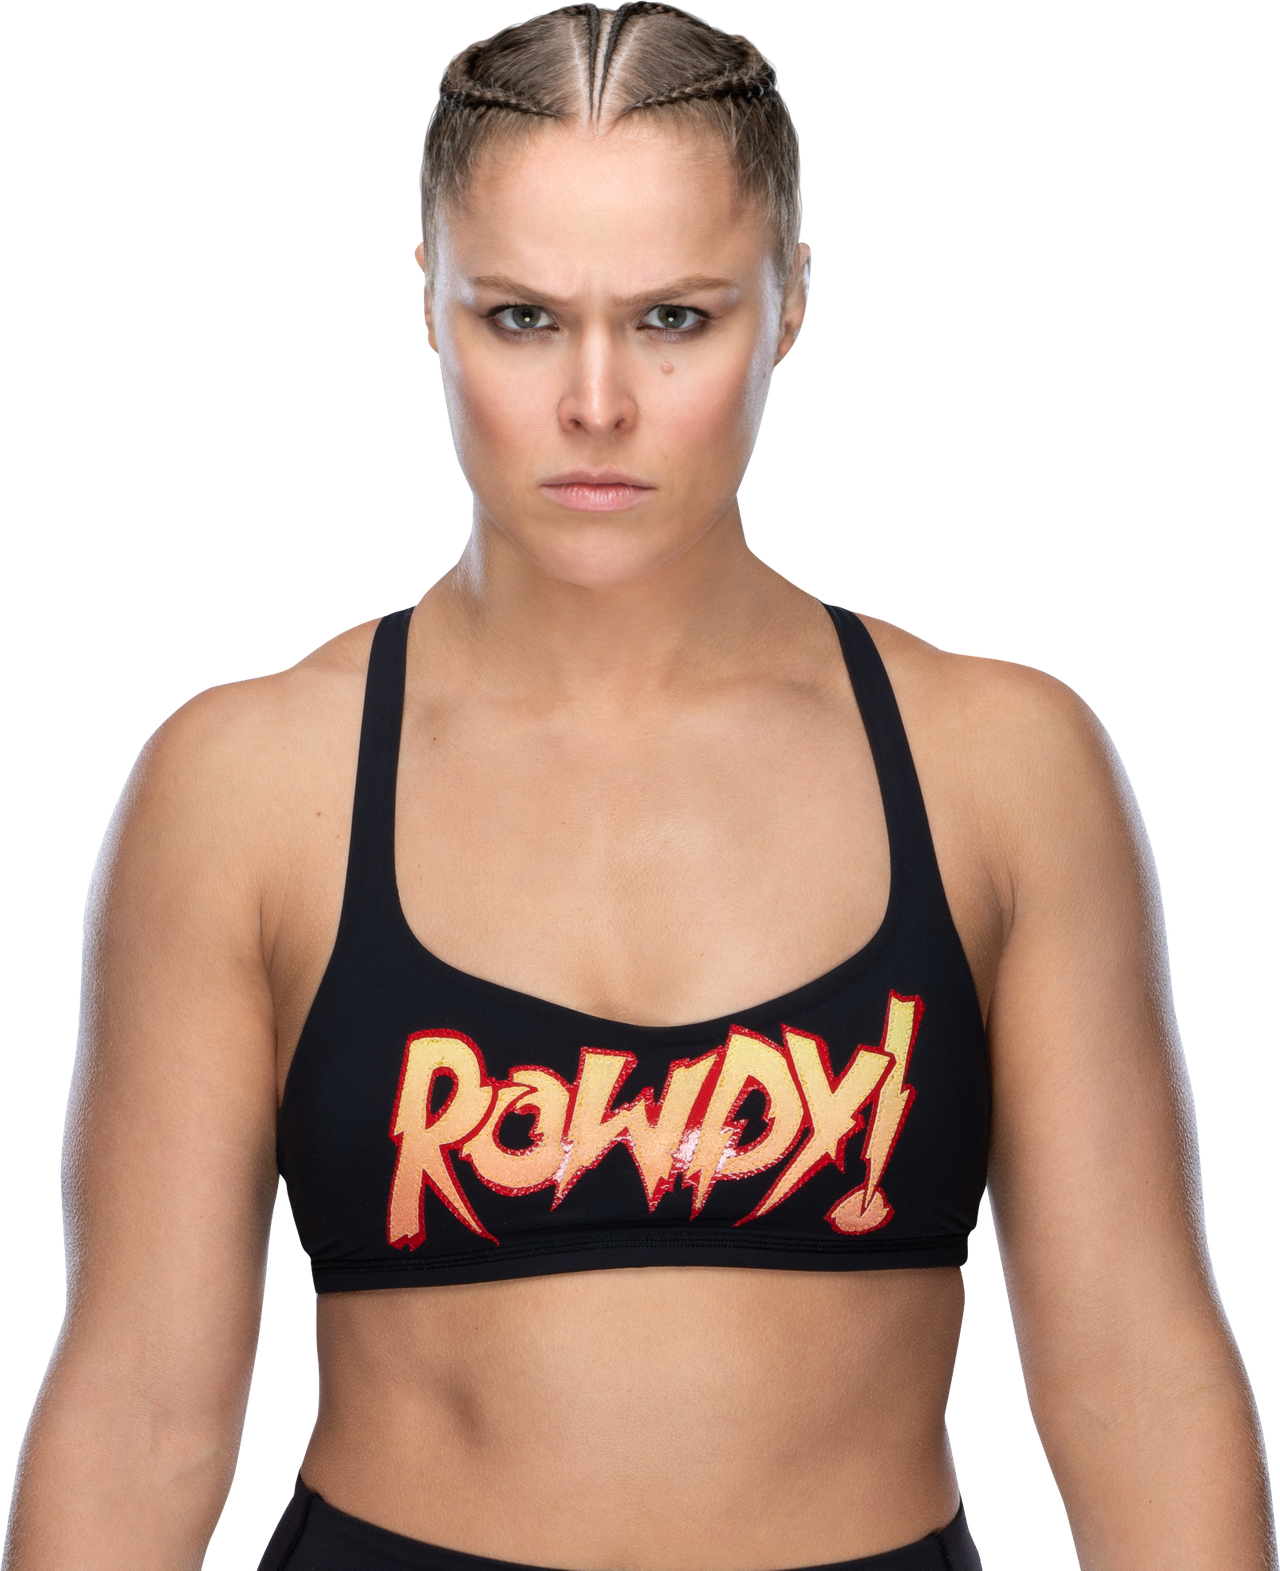 WWE Ronda Rousey Png Image HD.